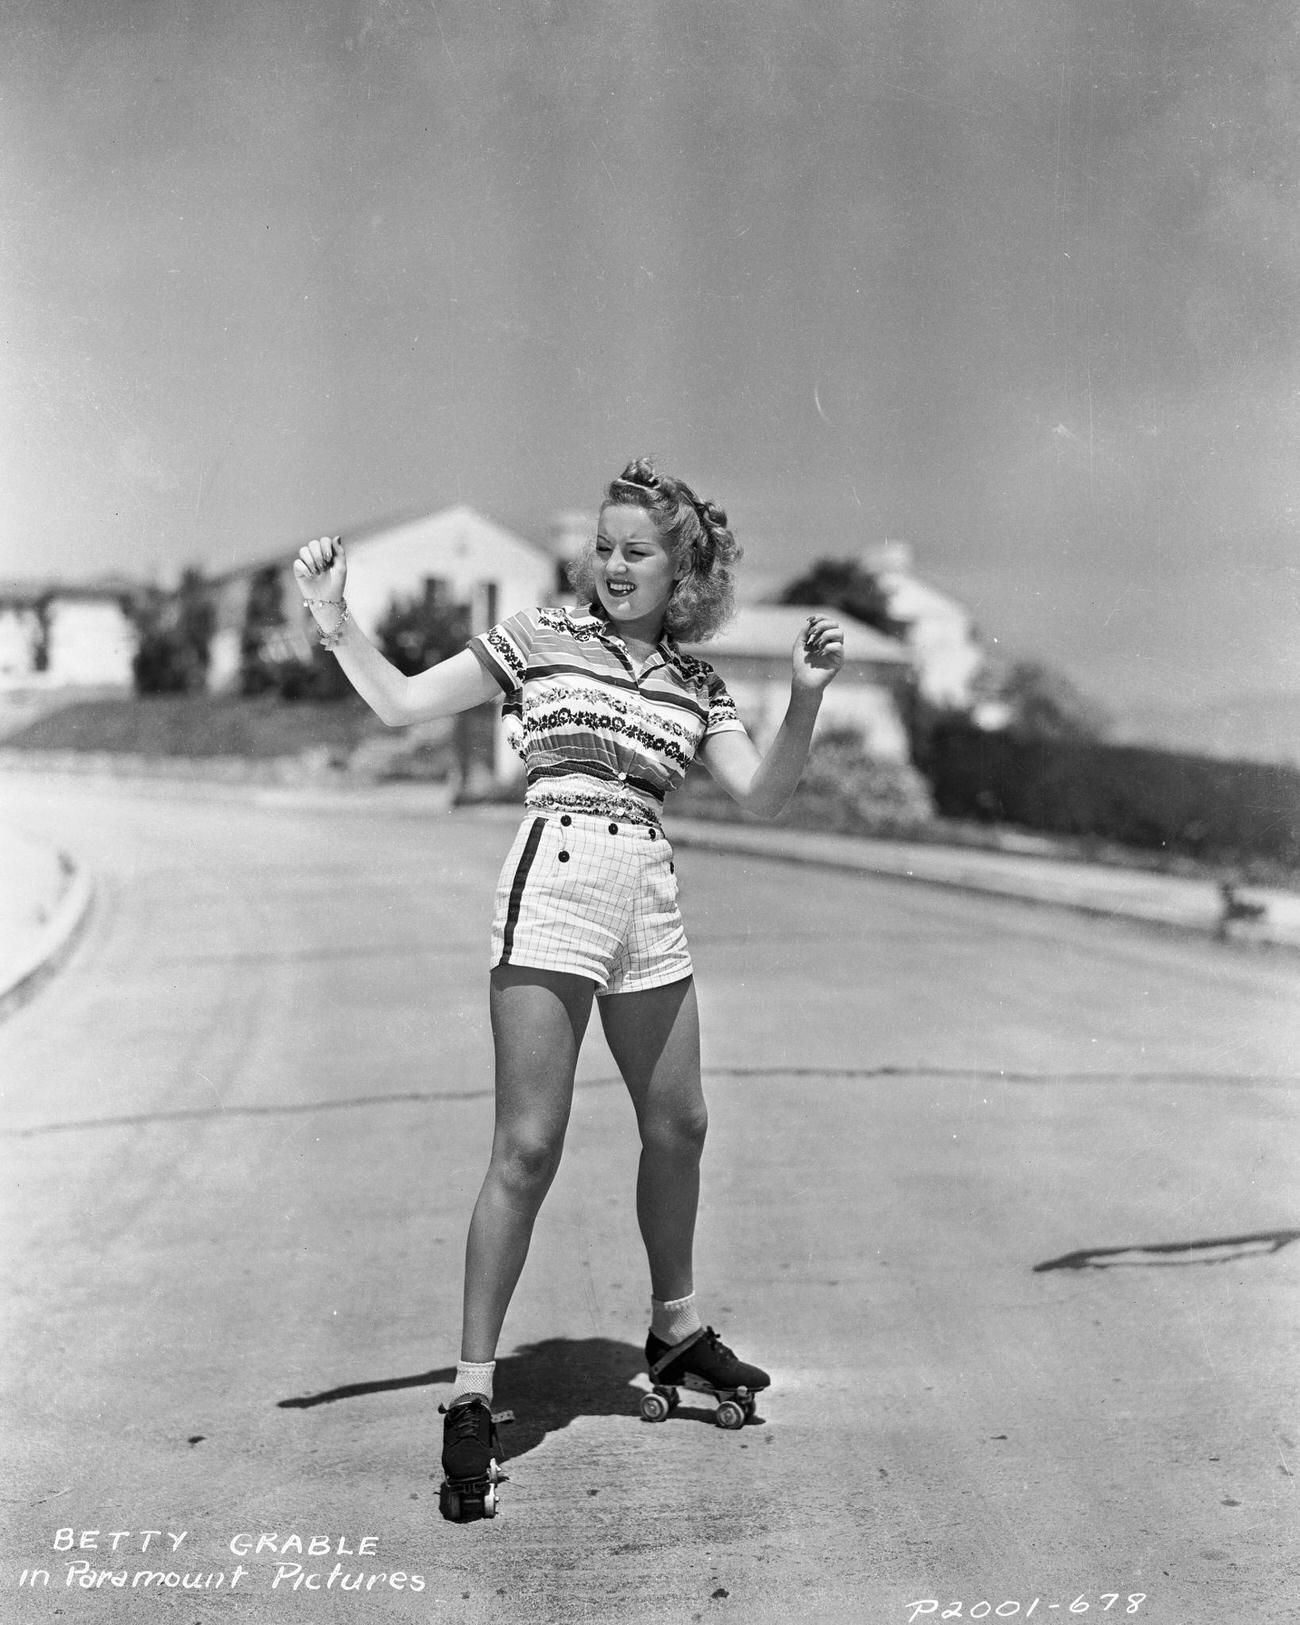 Actress Betty Grable Balancing on Roller Skates, circa 1935.